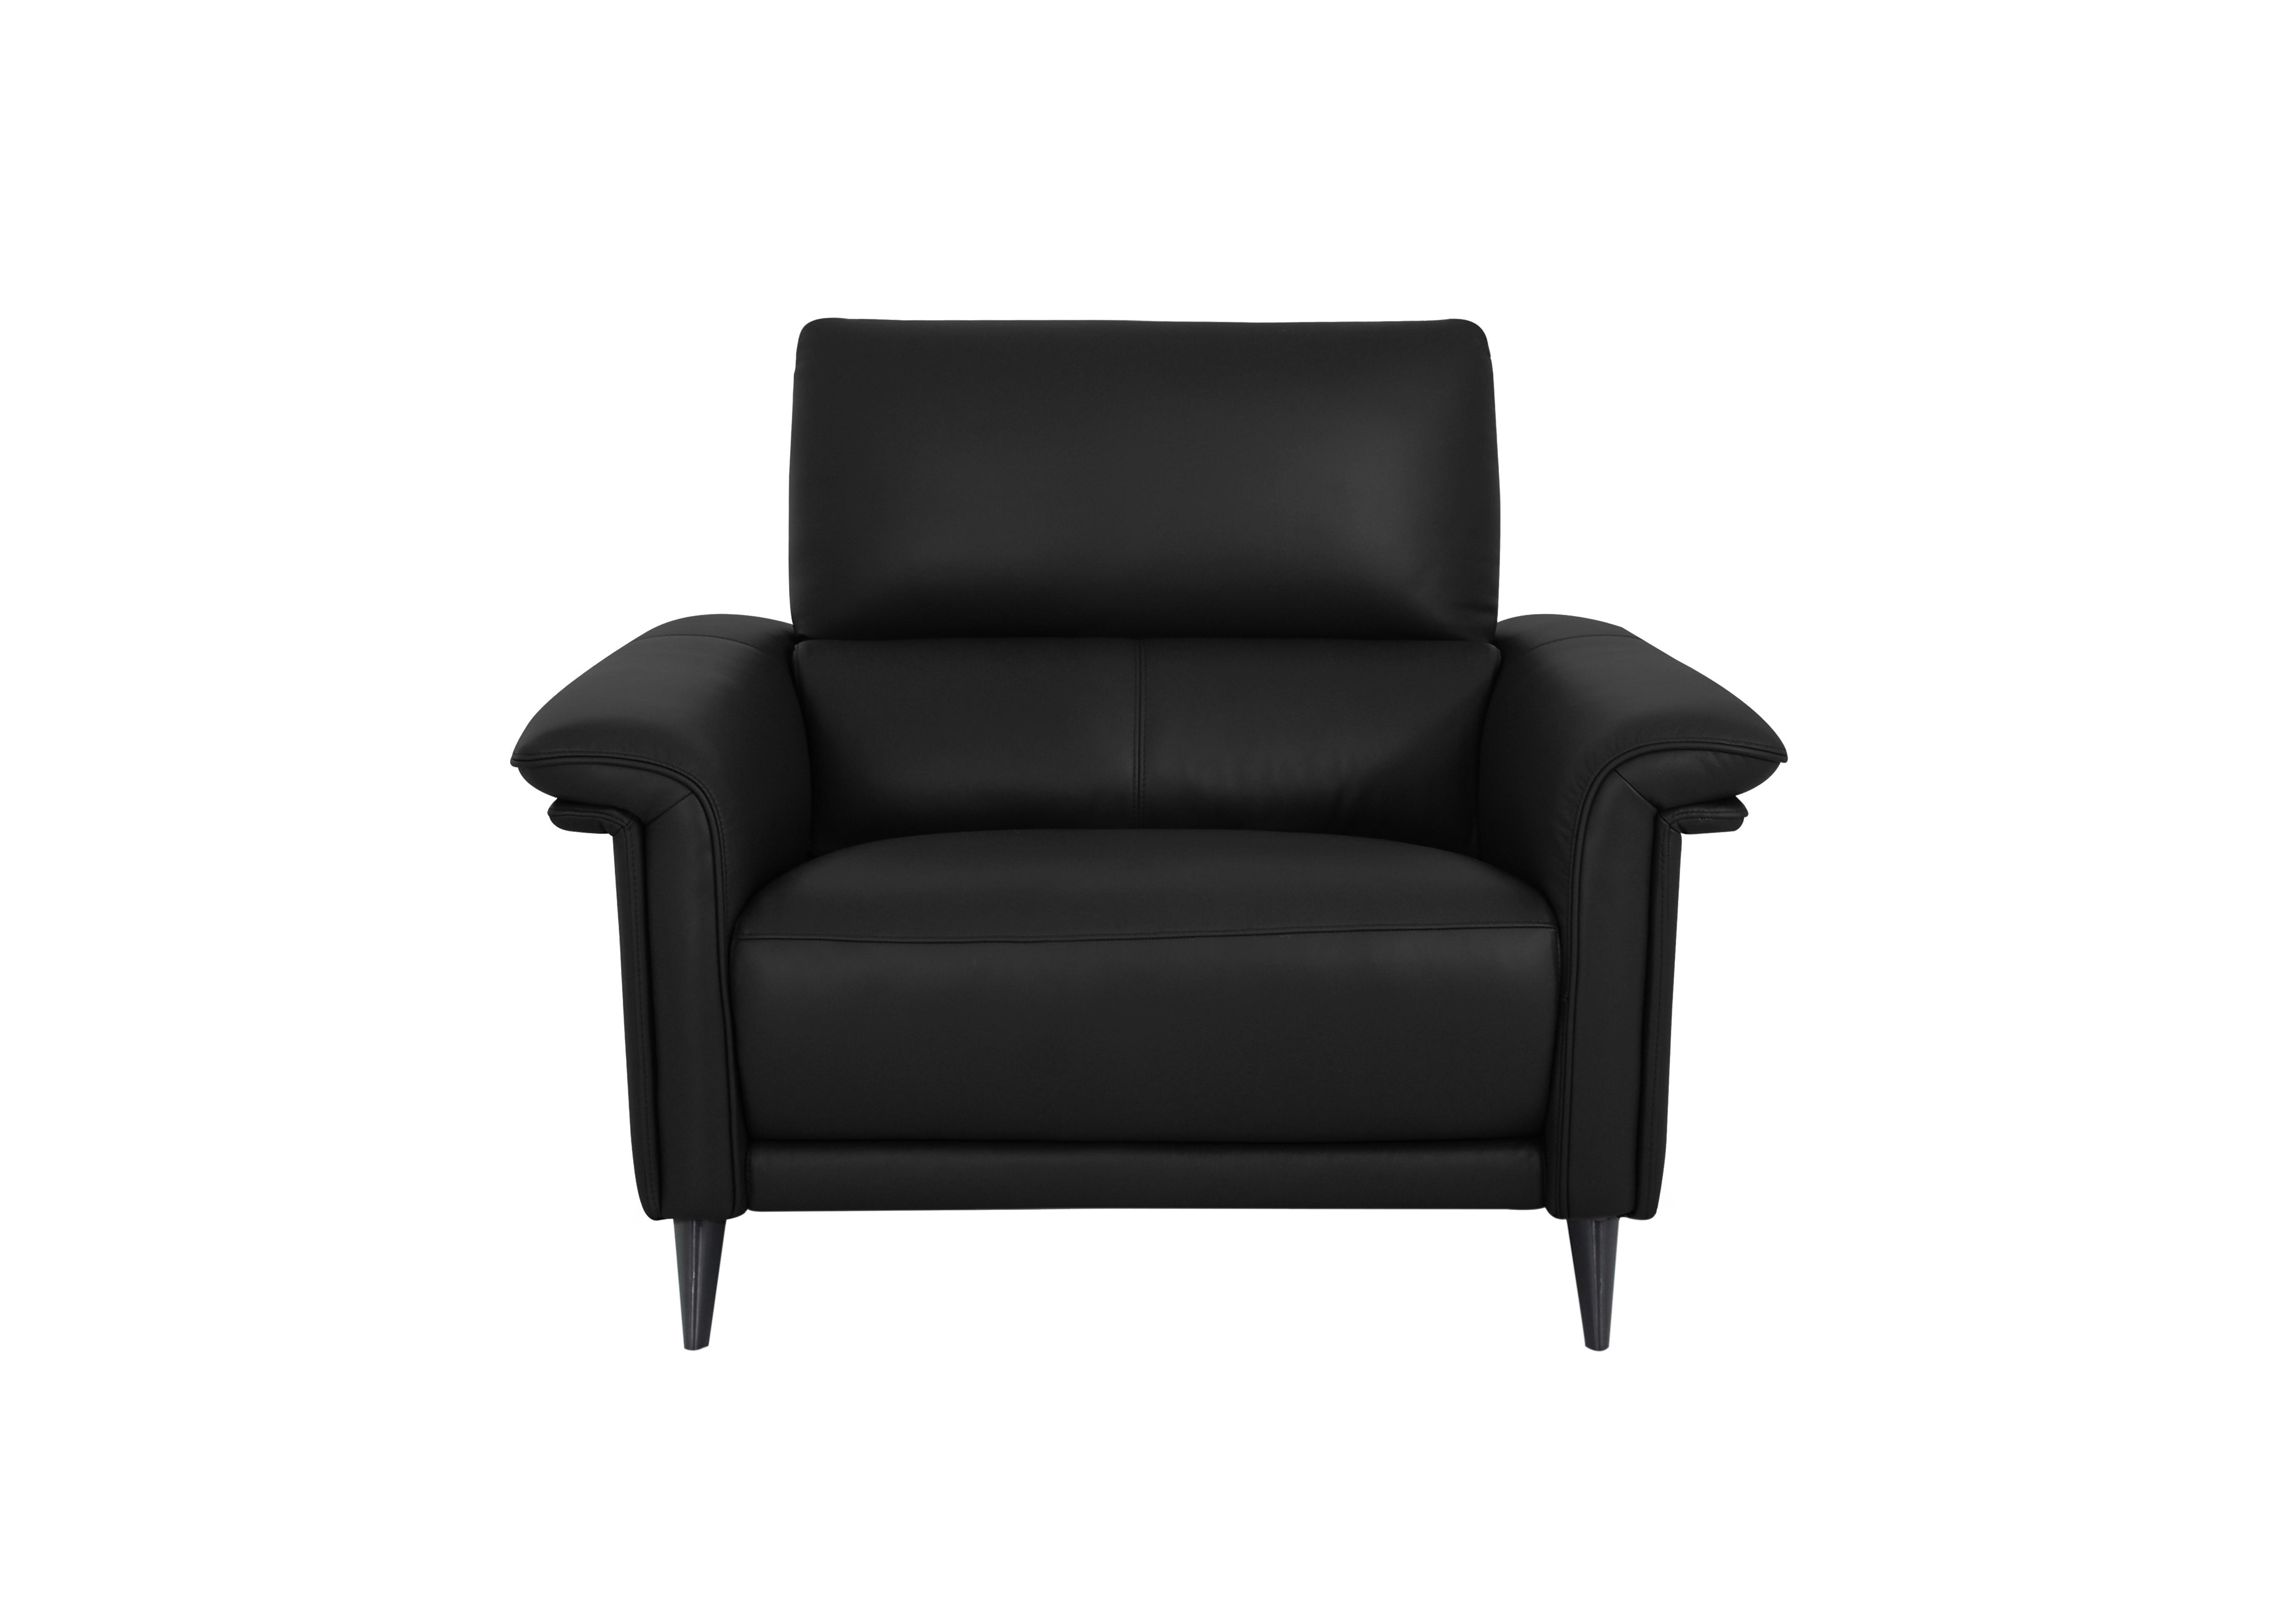 Huxley Leather Chair in Nn-514e Black on Furniture Village